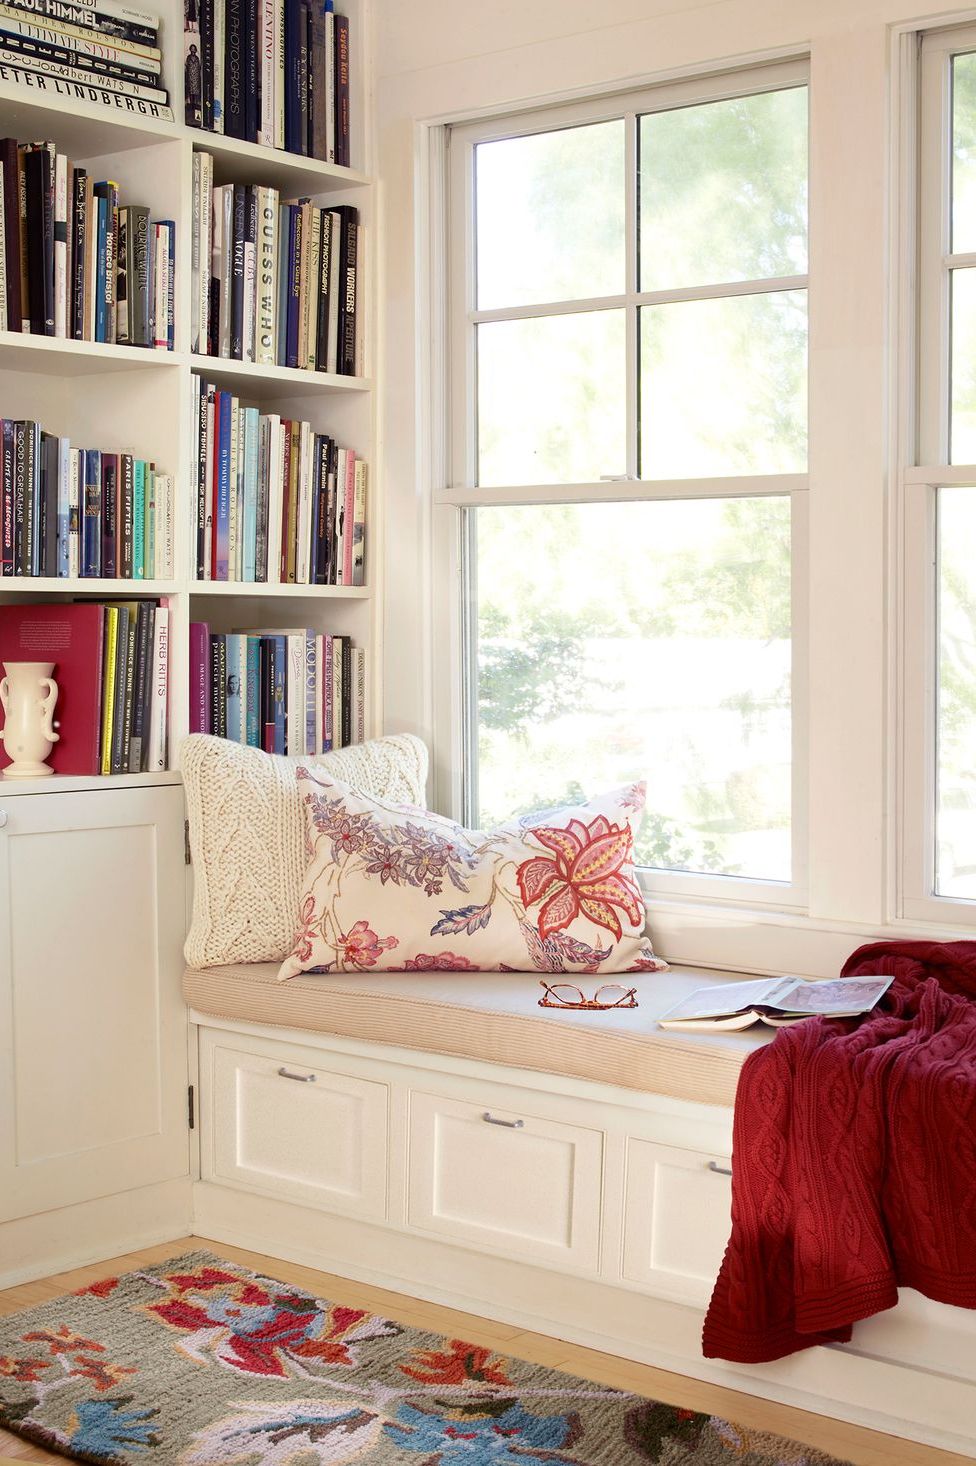 20 Chic Bookshelf Decorating Ideas - How to Decorate Bookshelves